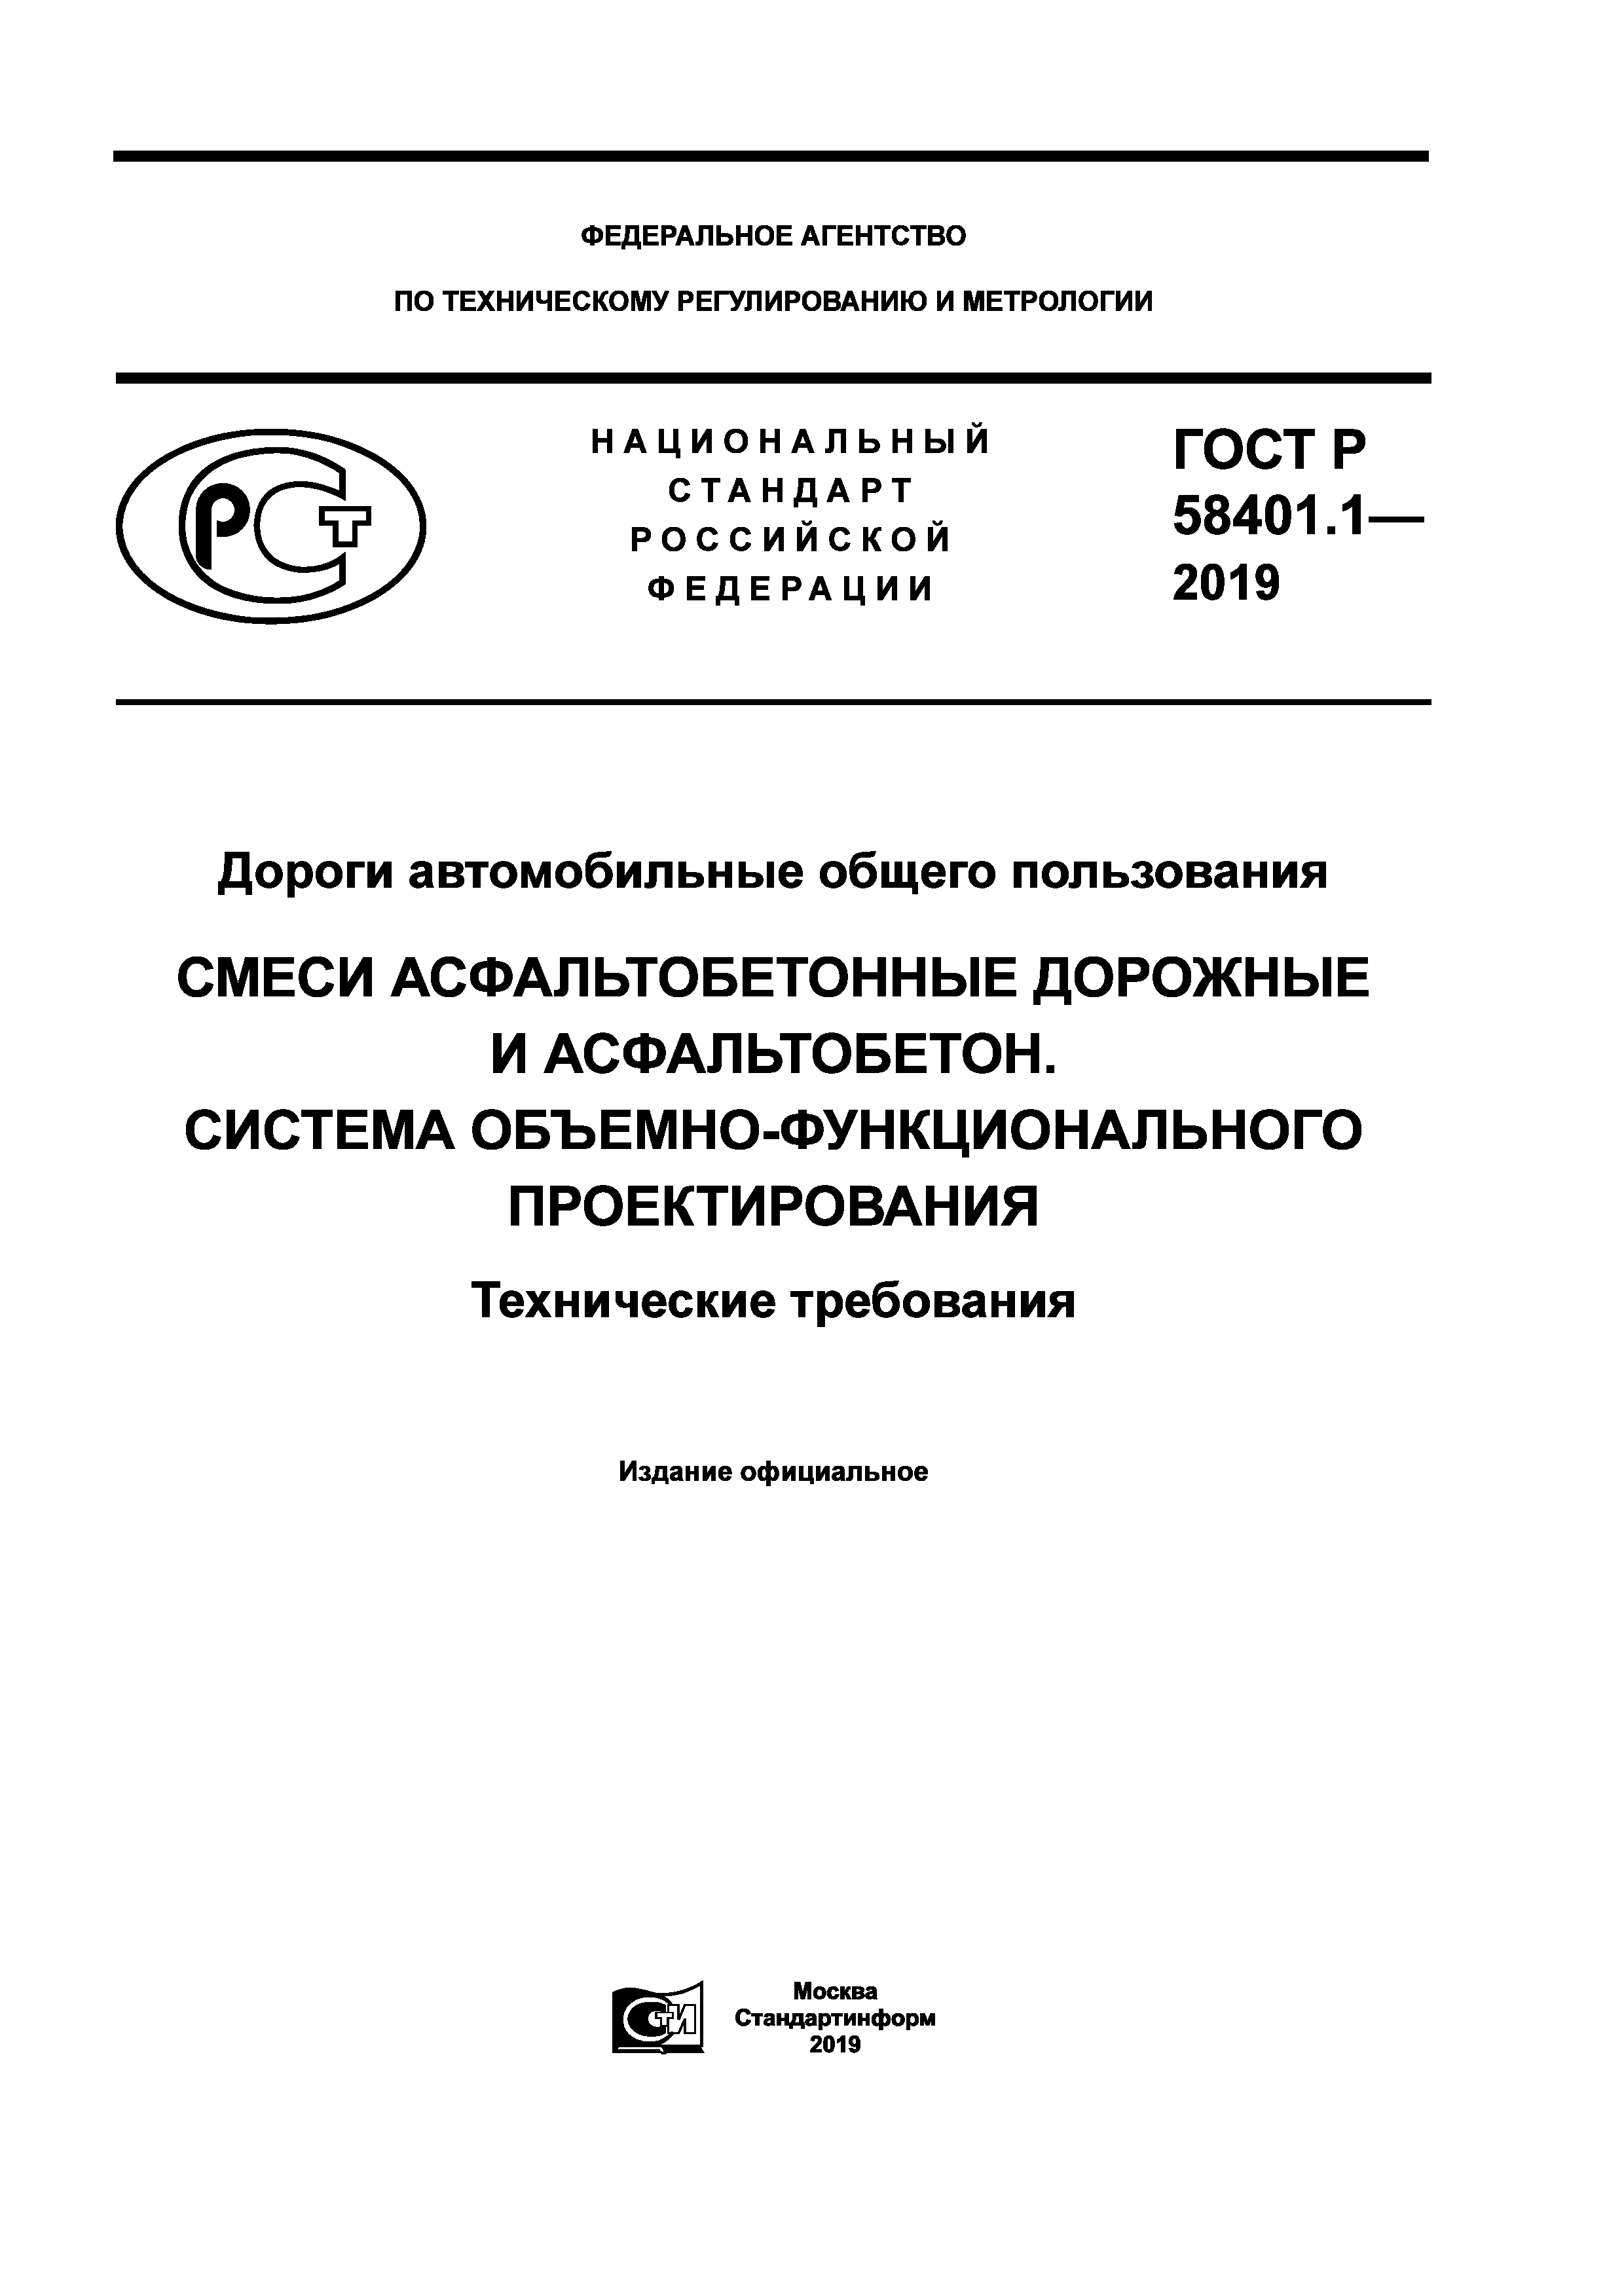 ГОСТ Р 58401.1-2019